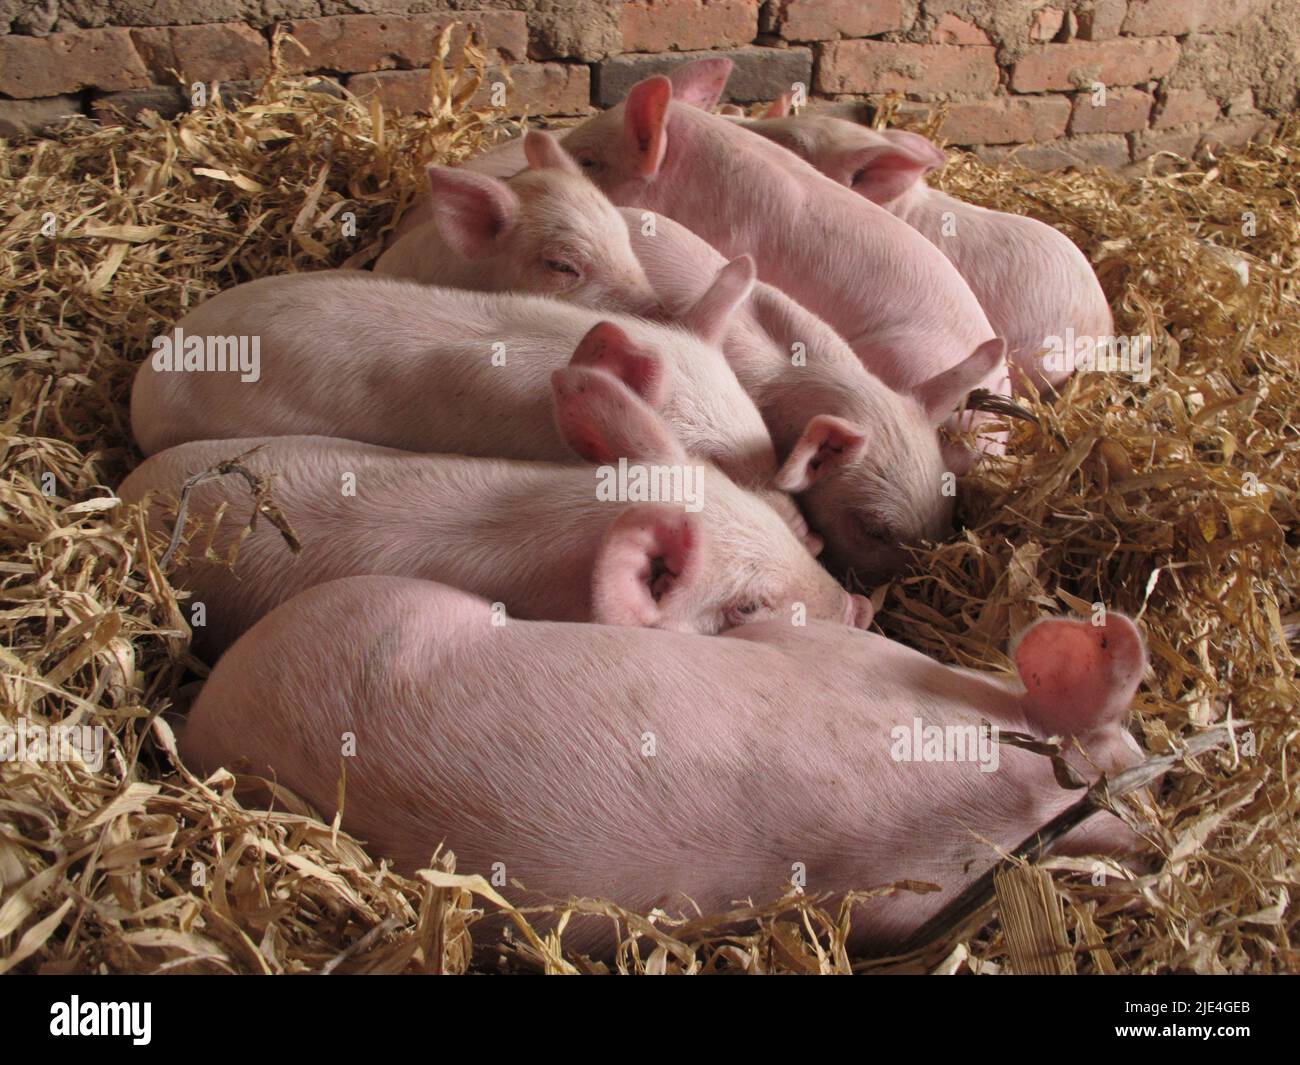 Pigs vertebrates mammals livestock sows and piglets Stock Photo